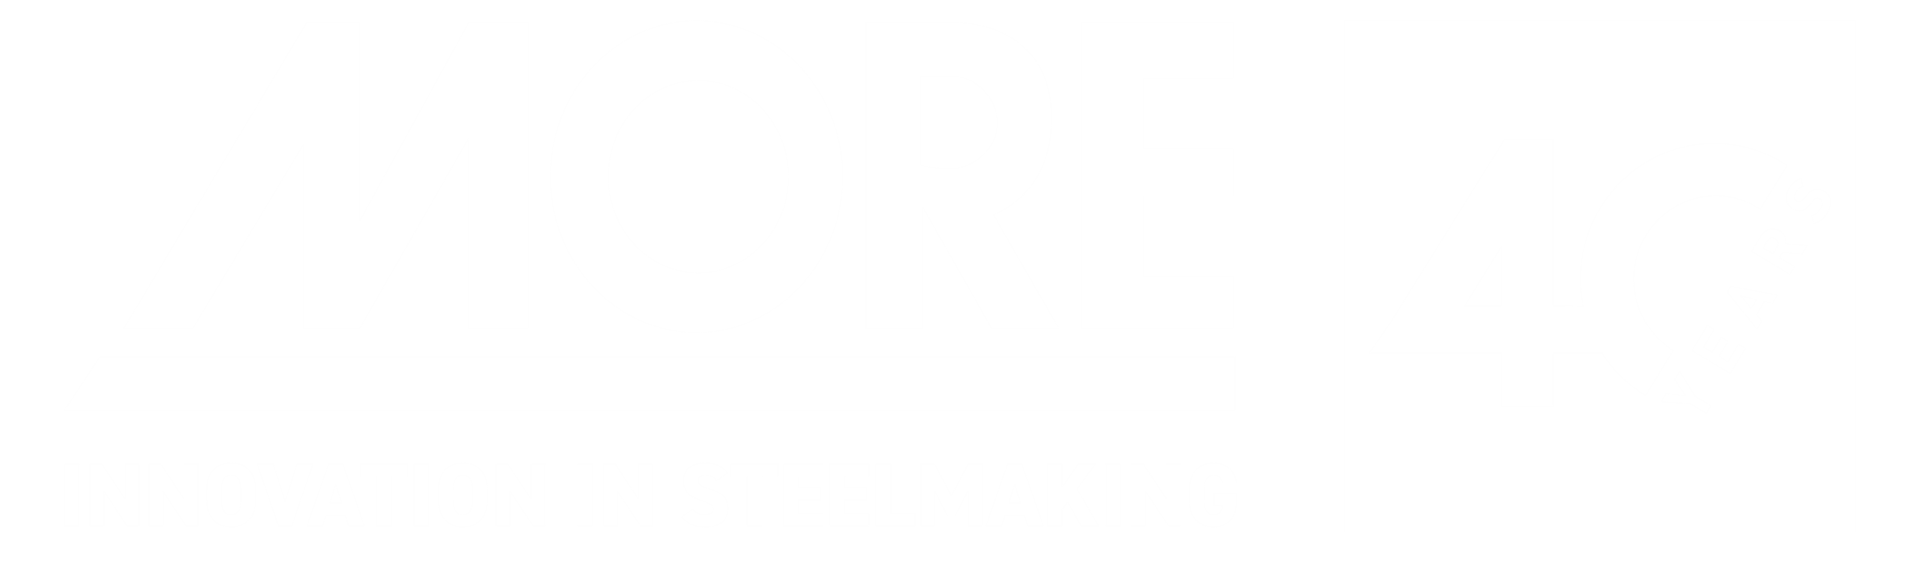 Innovation in steelmaking